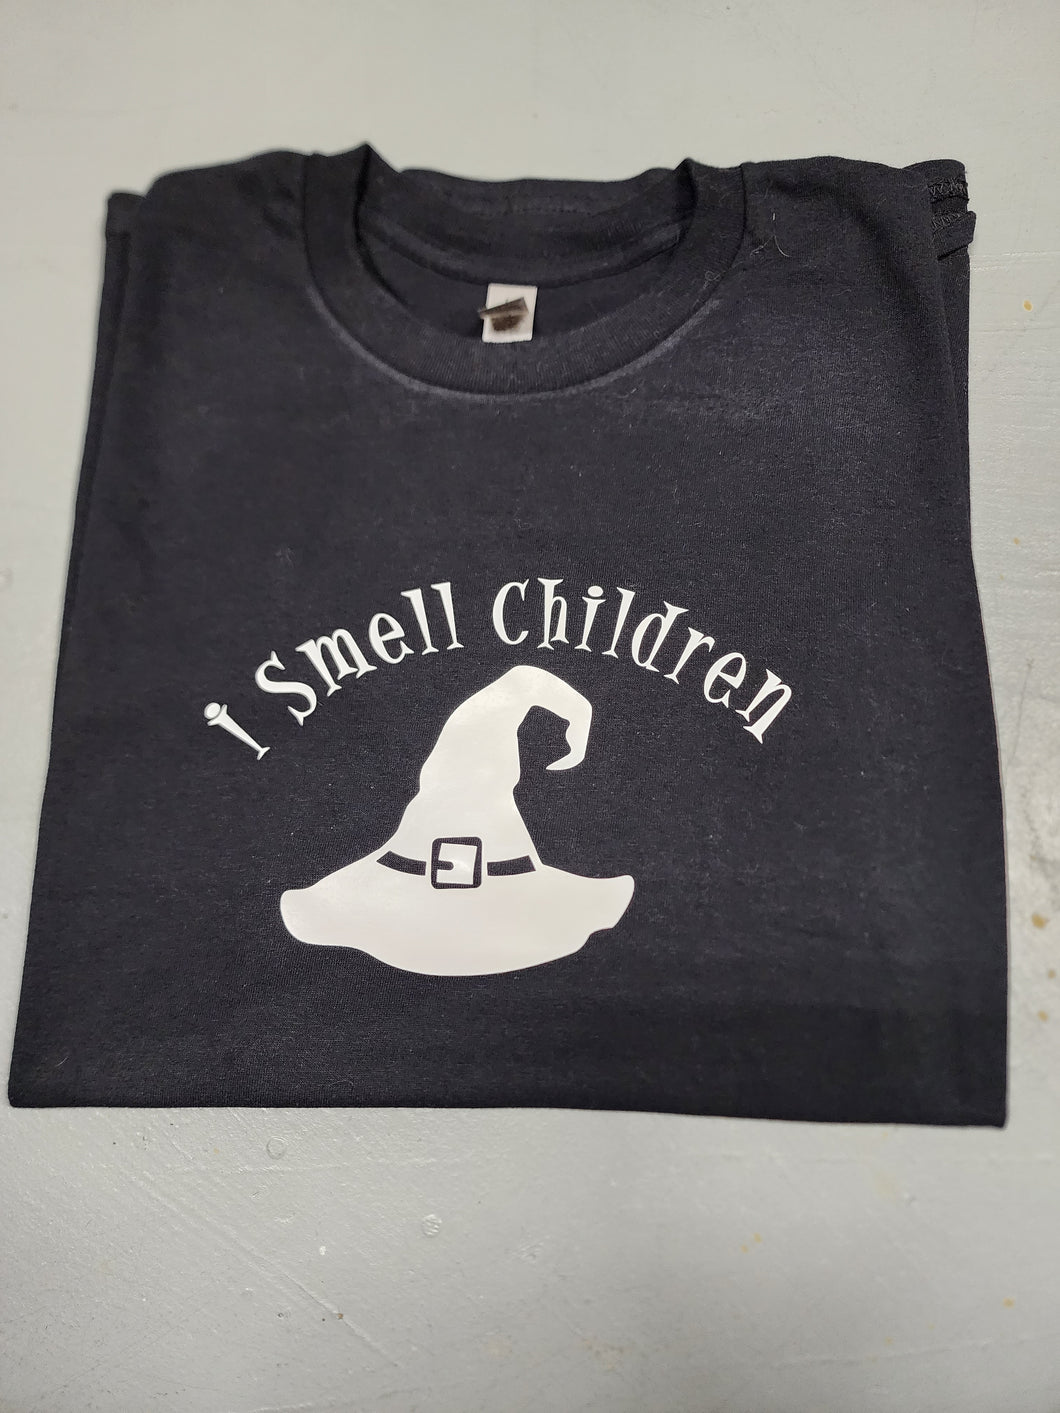 I Smell Children tshirt